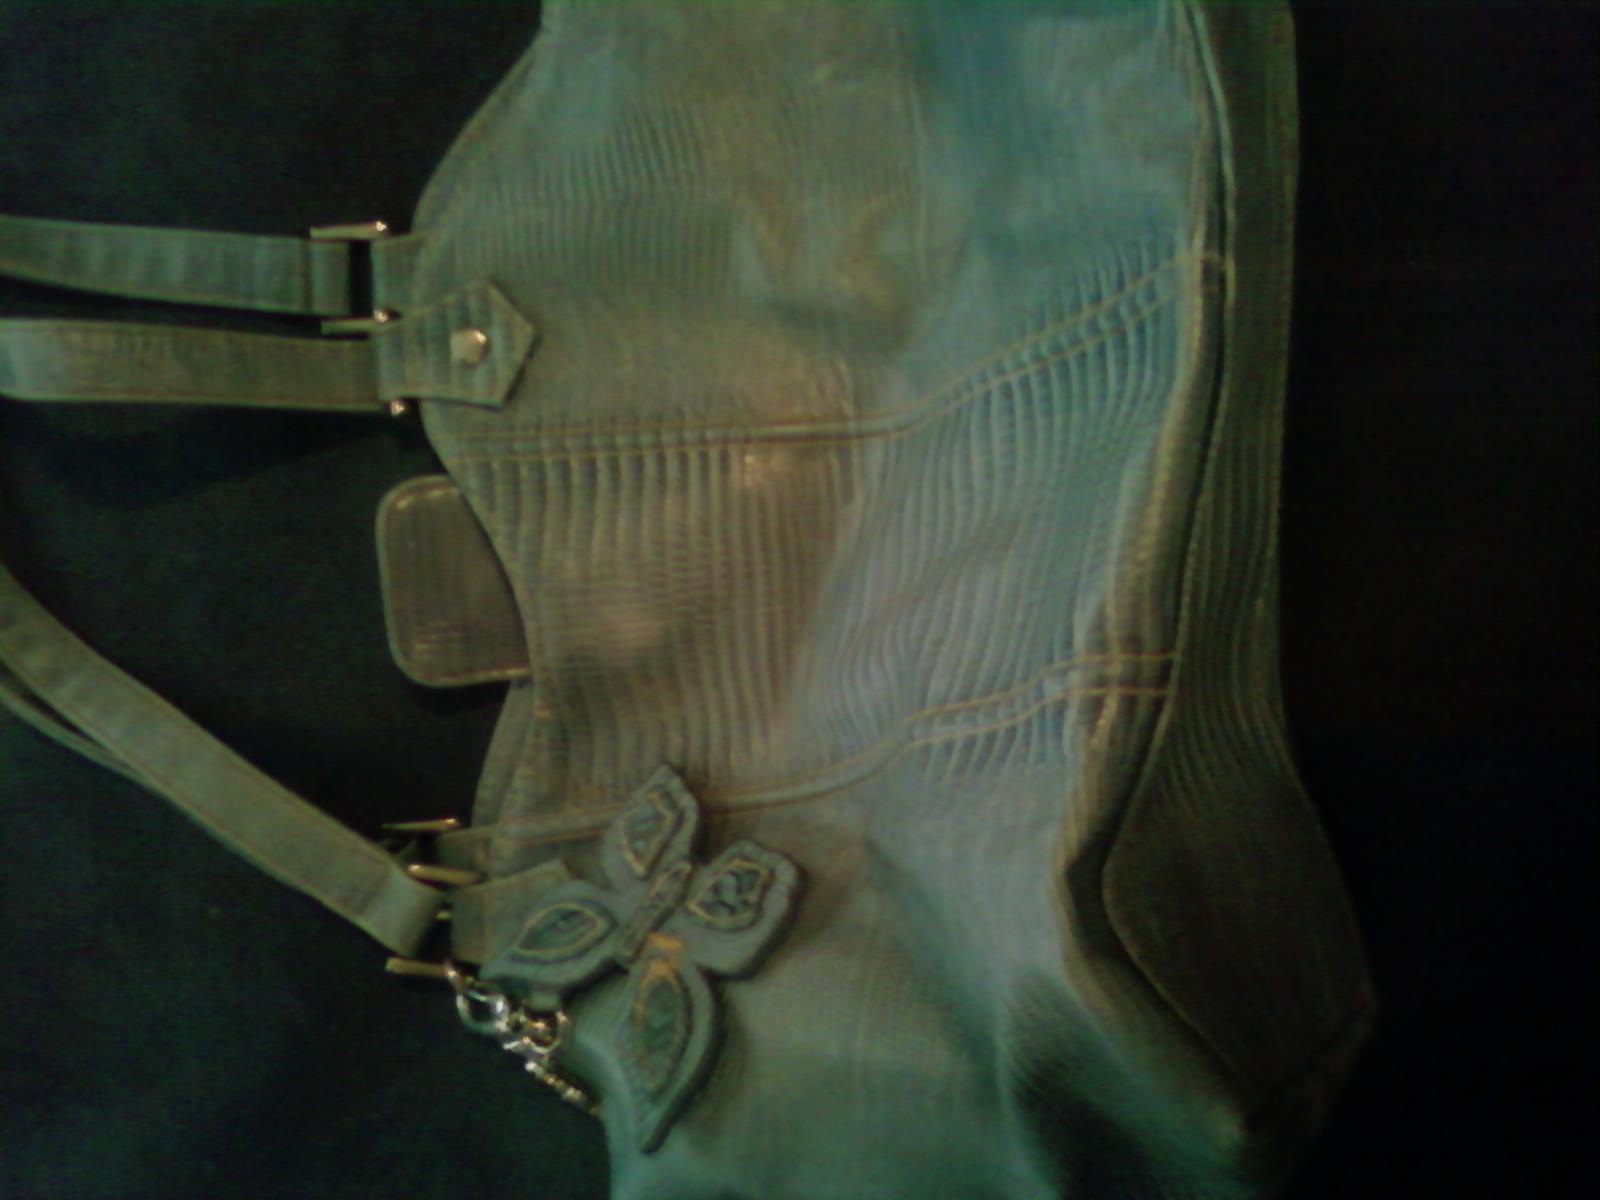 Ligtht blue handbag with butteyfly dangle